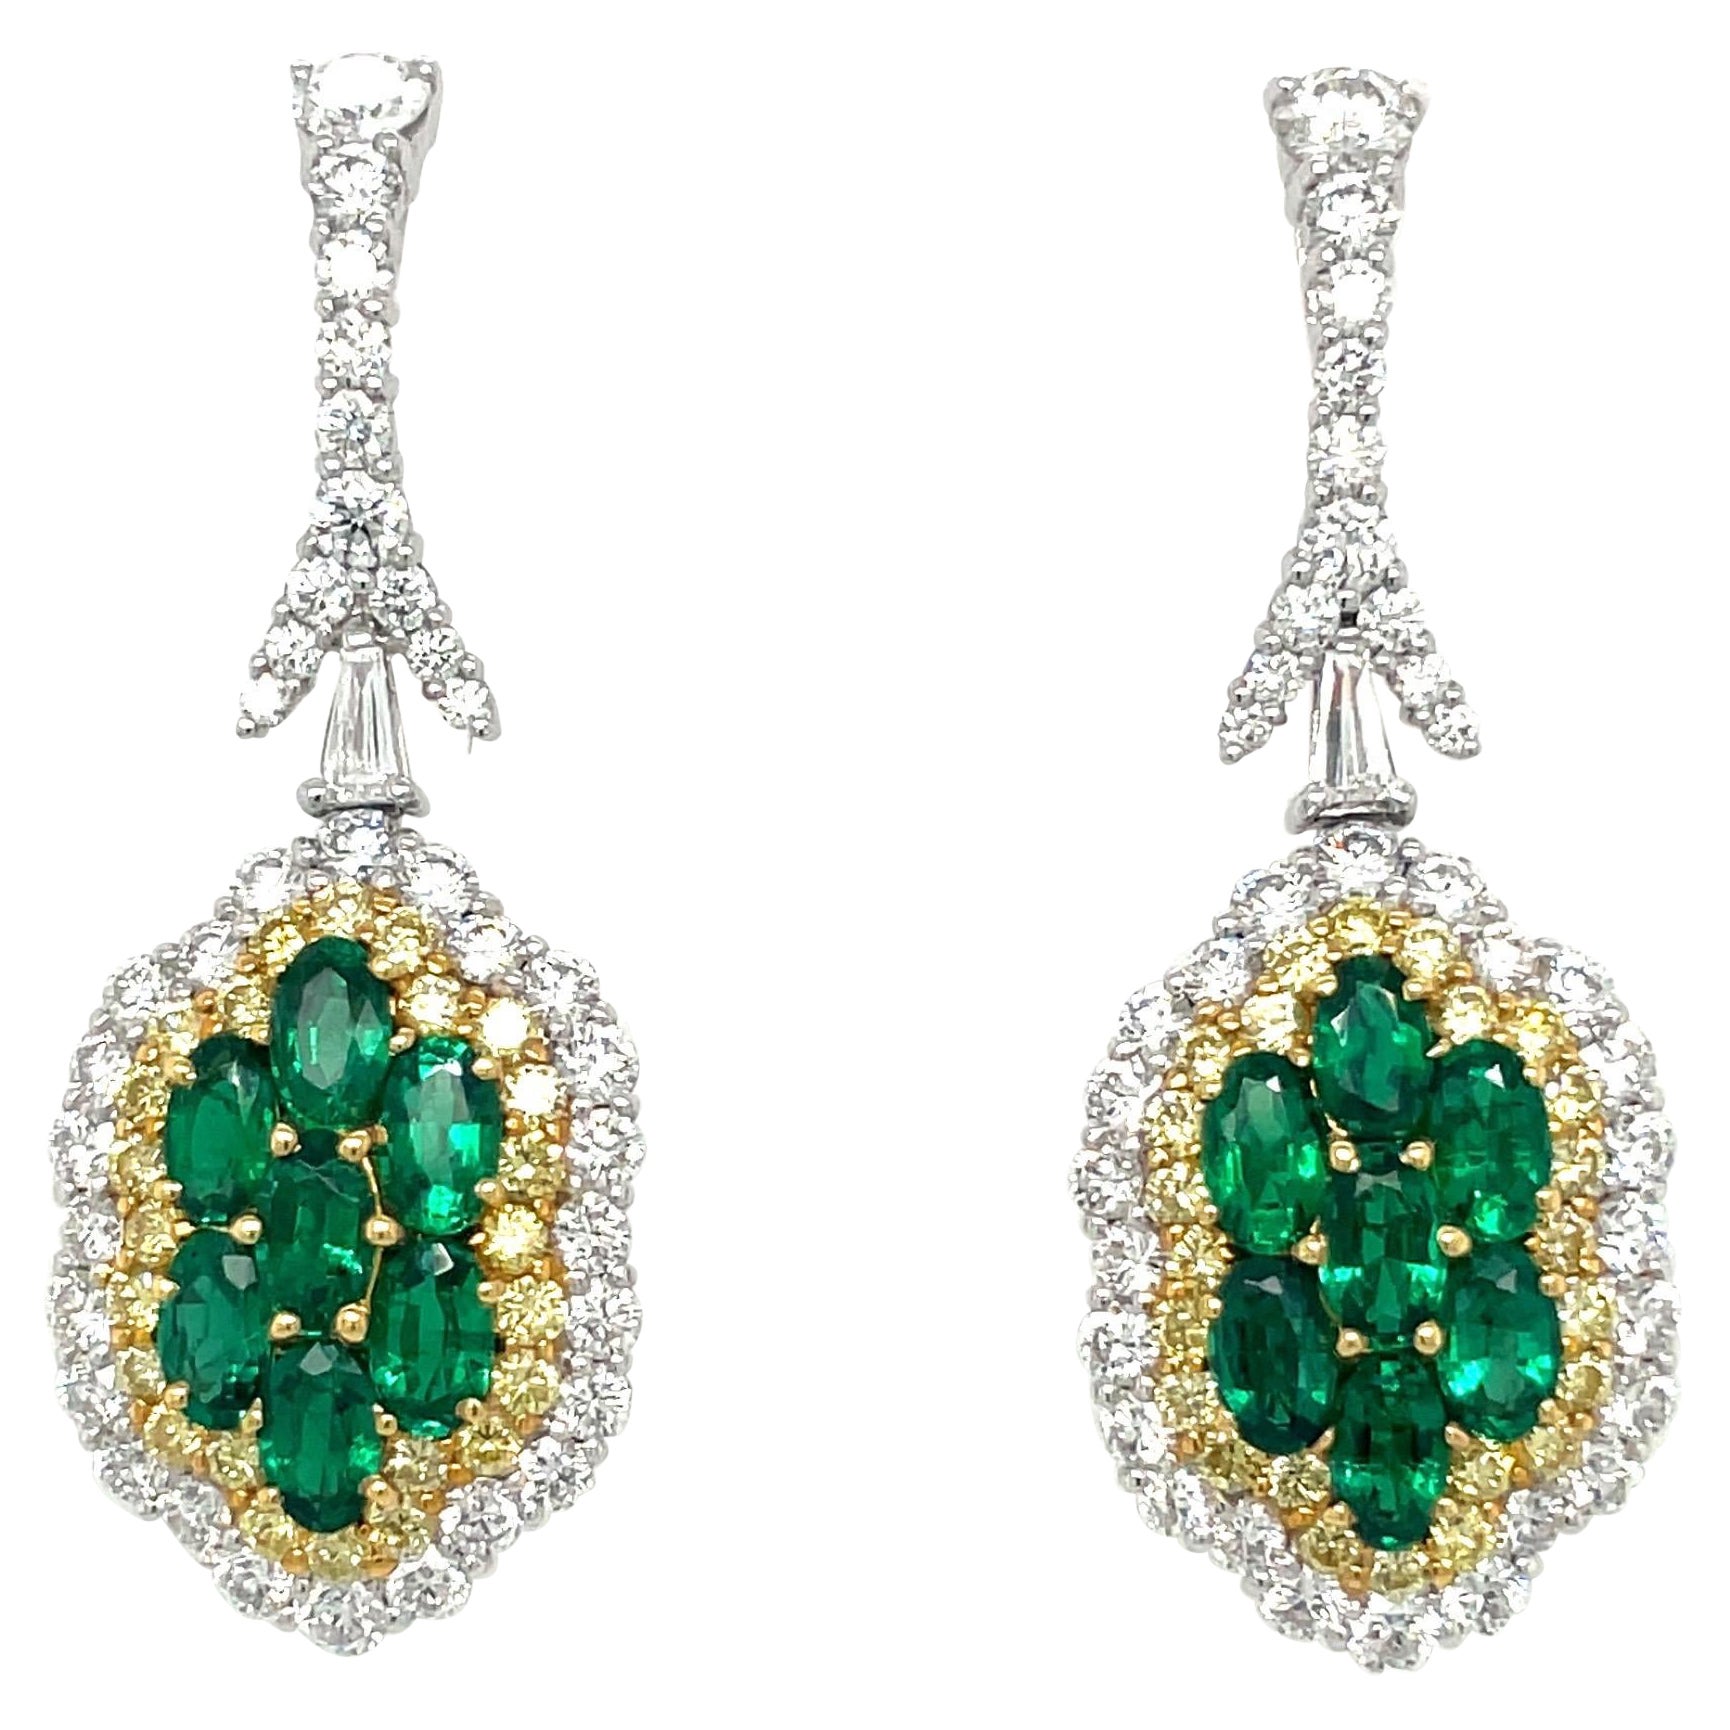 Plat/18KT YG 3.00Ct Emerald Earrings with 2.66Ct Diamonds 1.07Ct Yellow Diamonds